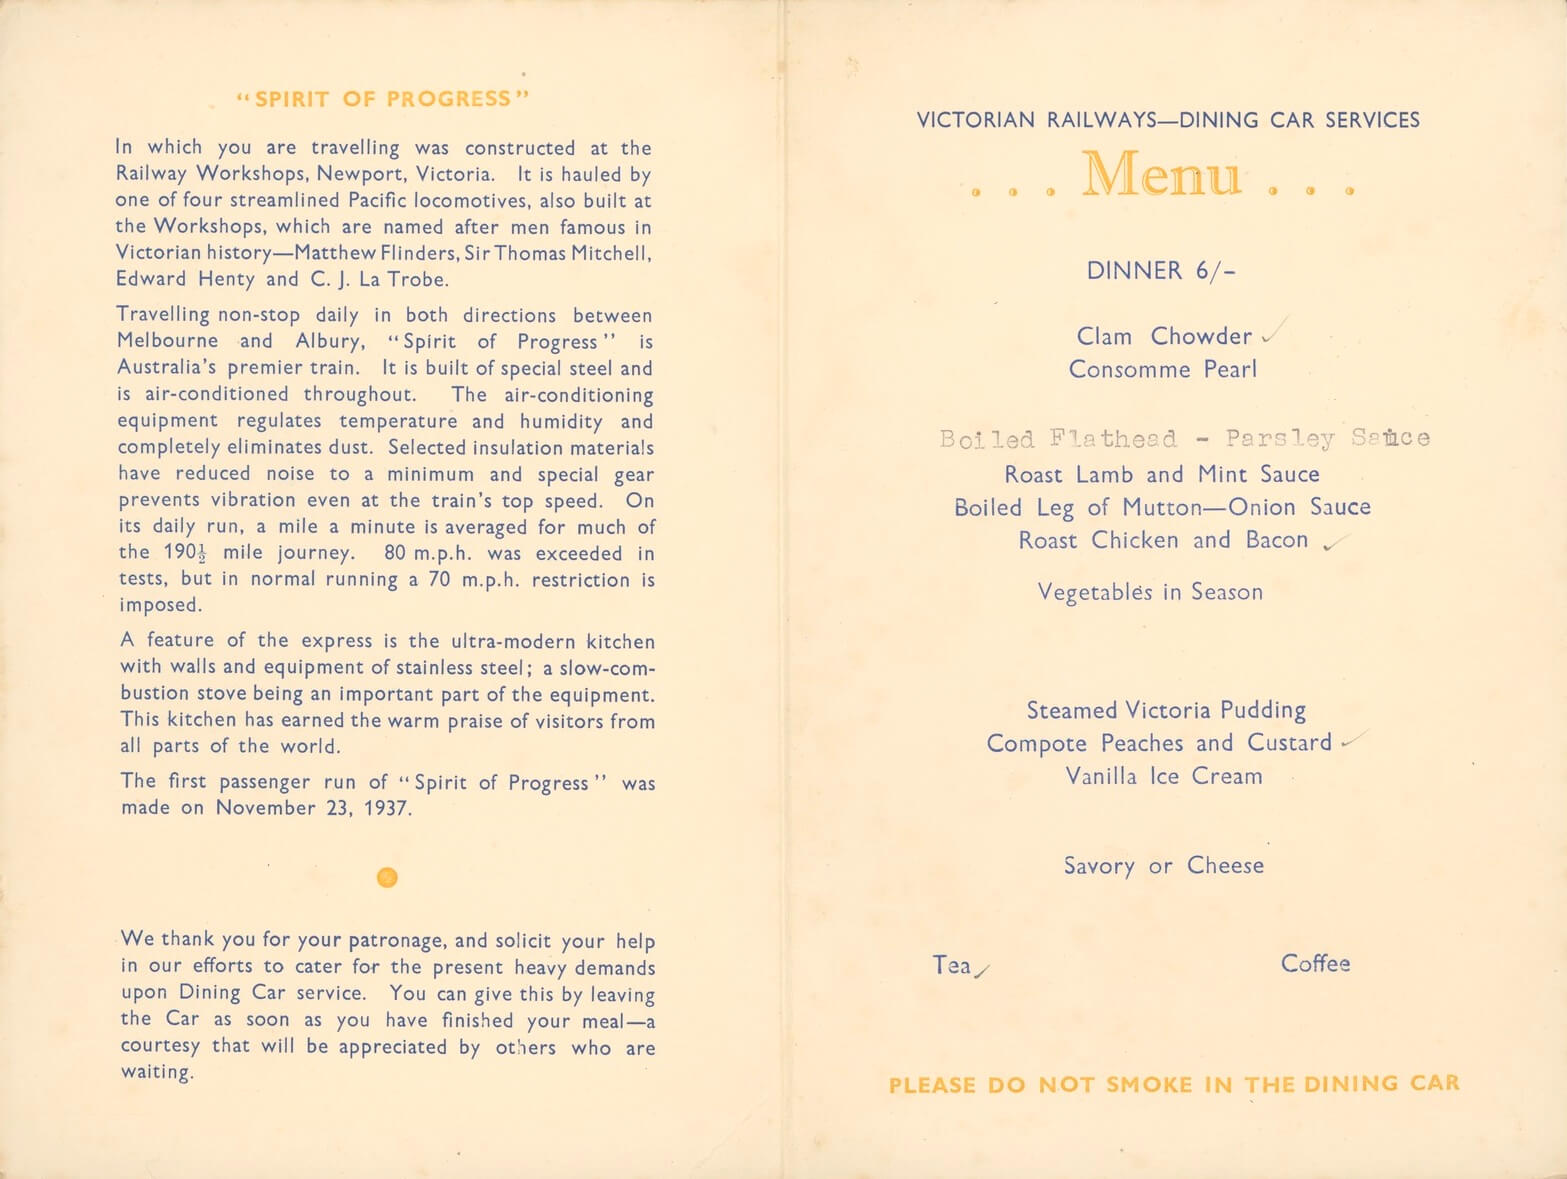 Spirit of Progress menu, produced by Victorian Railways, c.1937. SLV